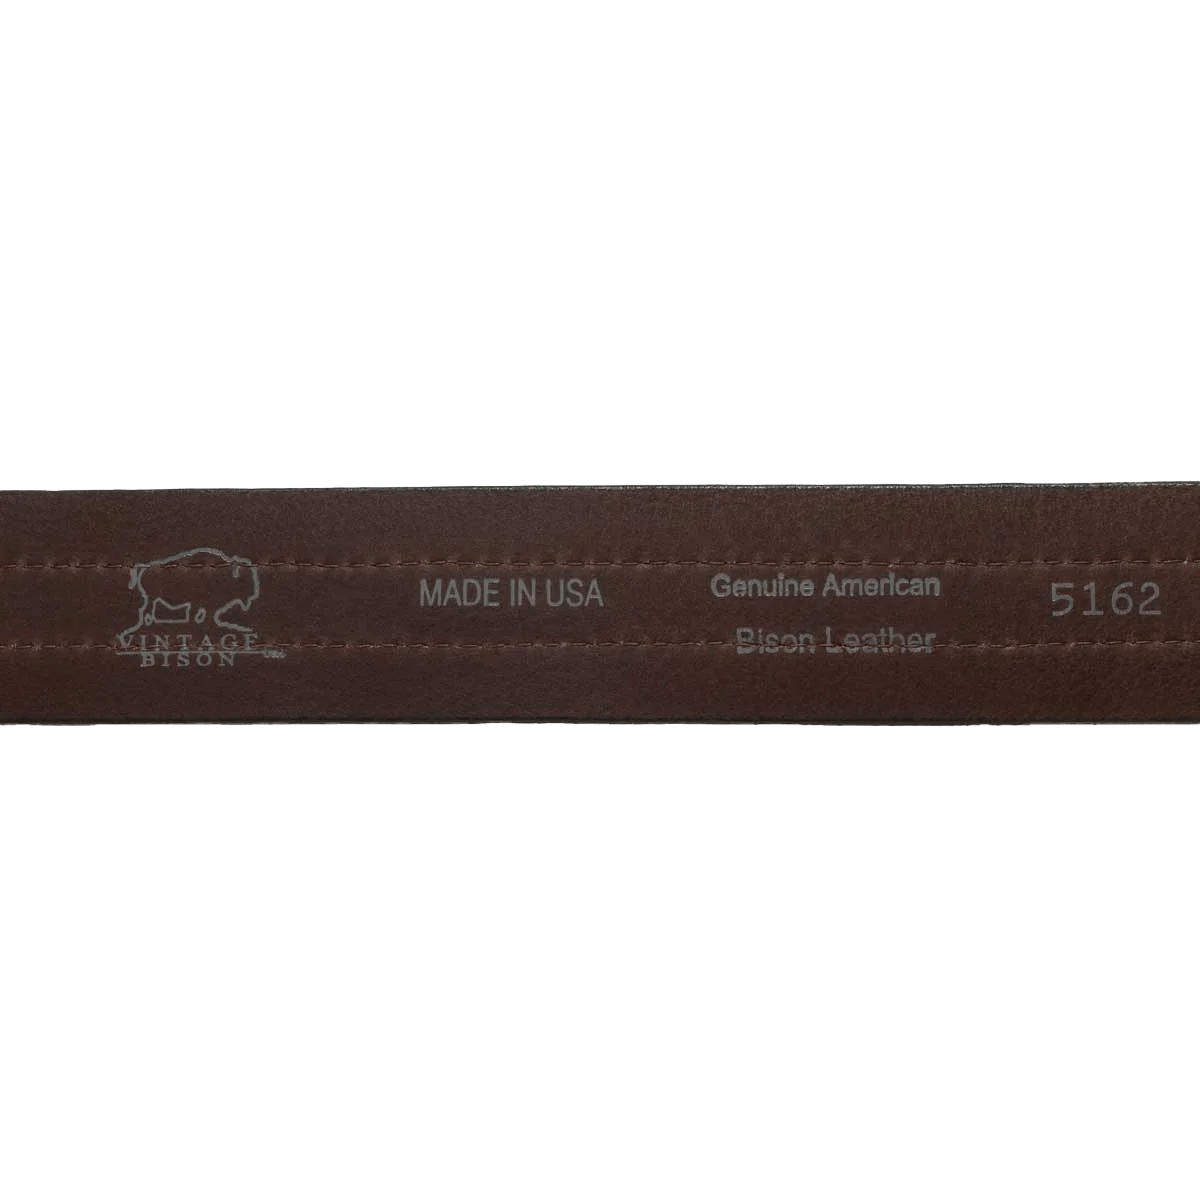 COLOMA Vintage Bison USA